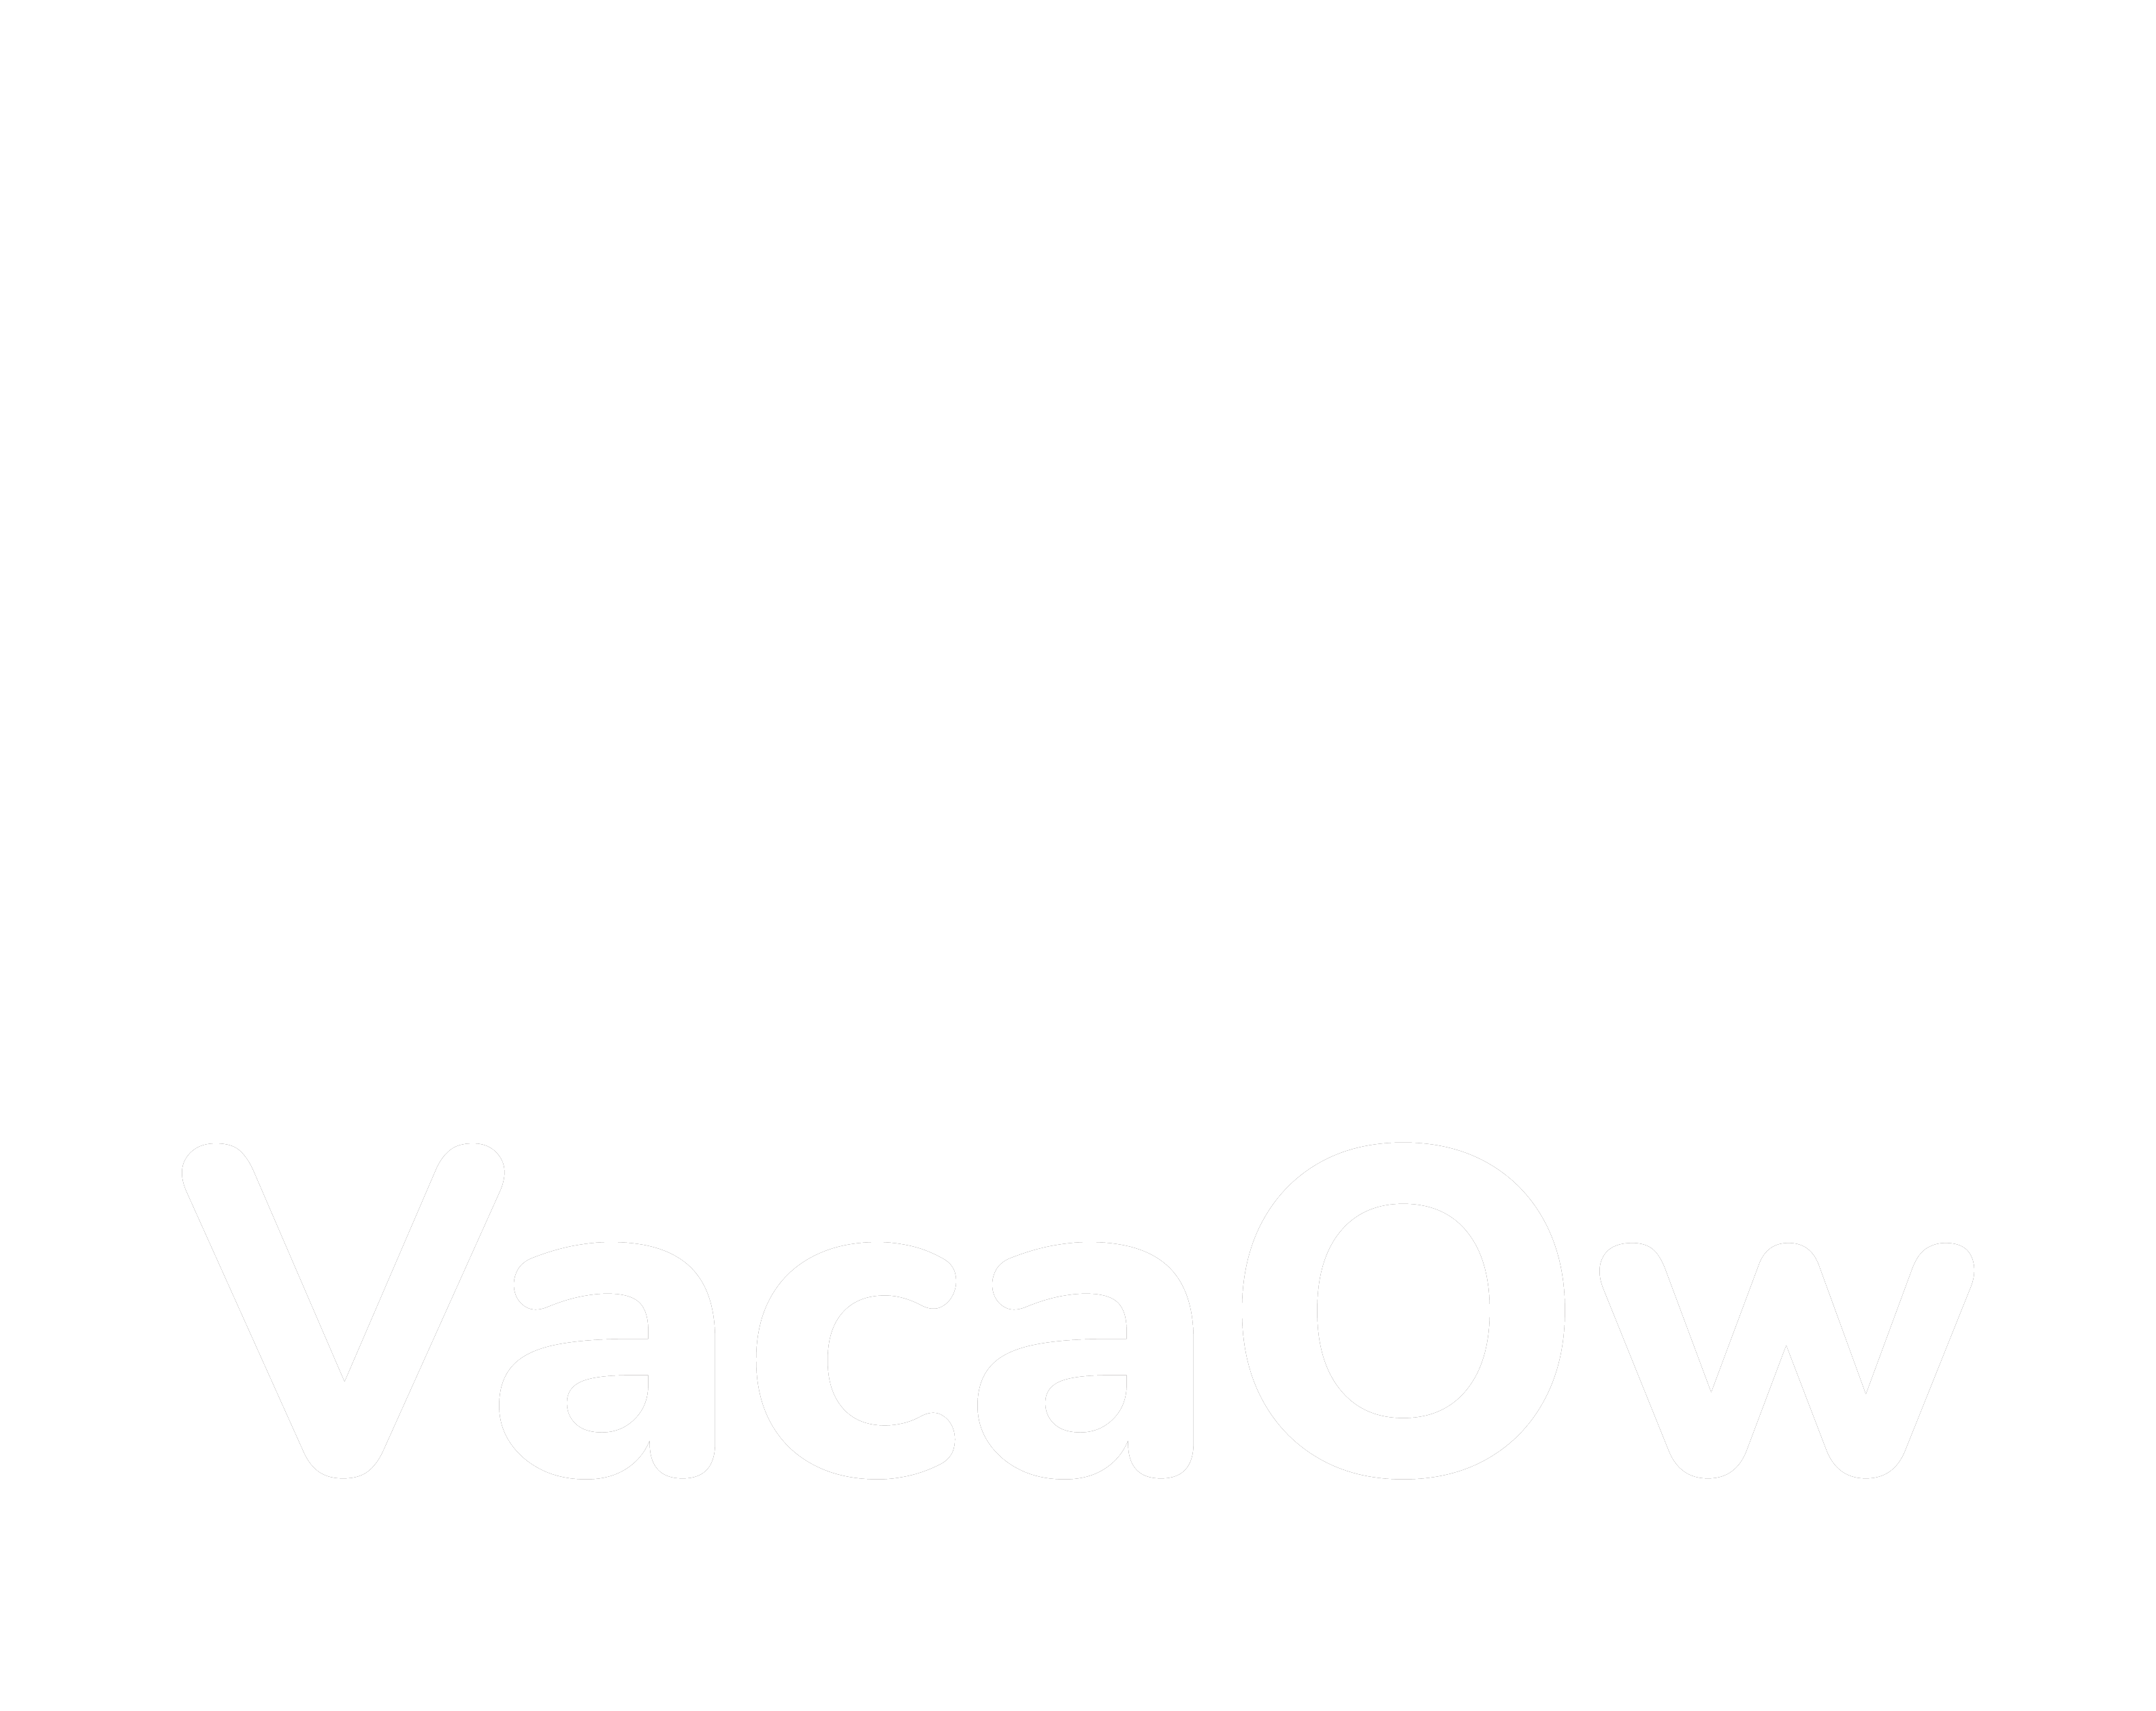 Vacaow Logo Header